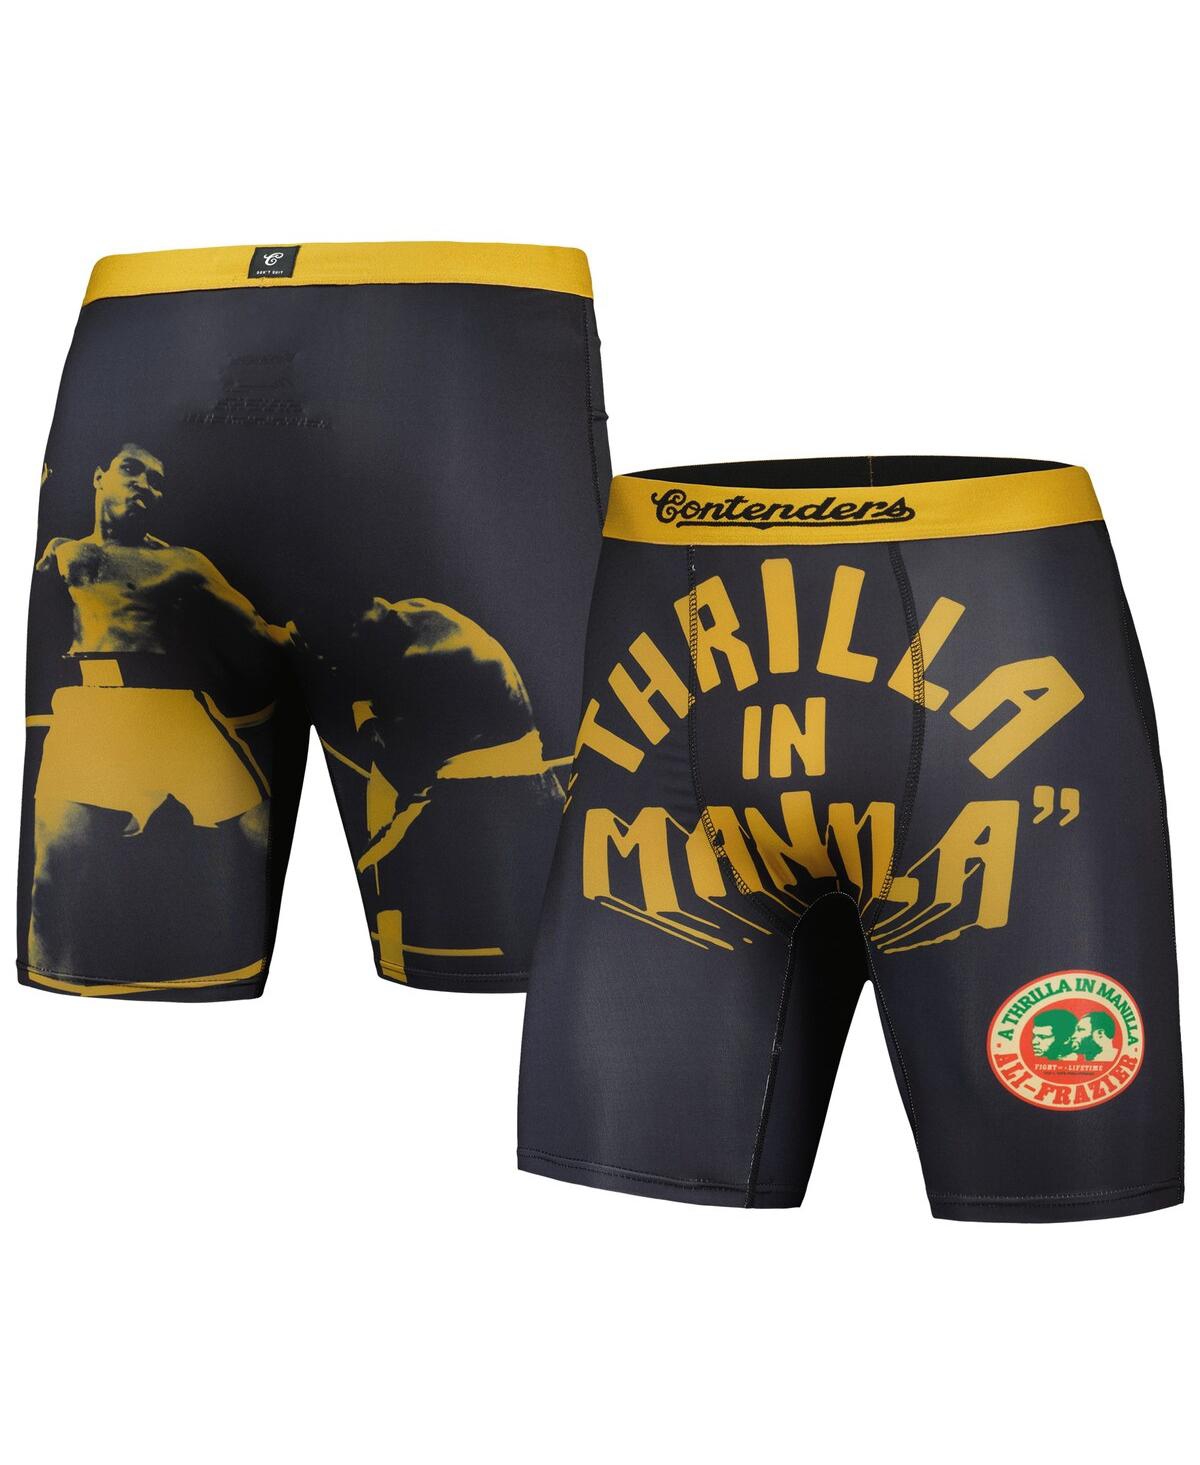 Contenders Clothing Men's  Black Muhammad Ali "thrilla In Manilla" Boxer Briefs